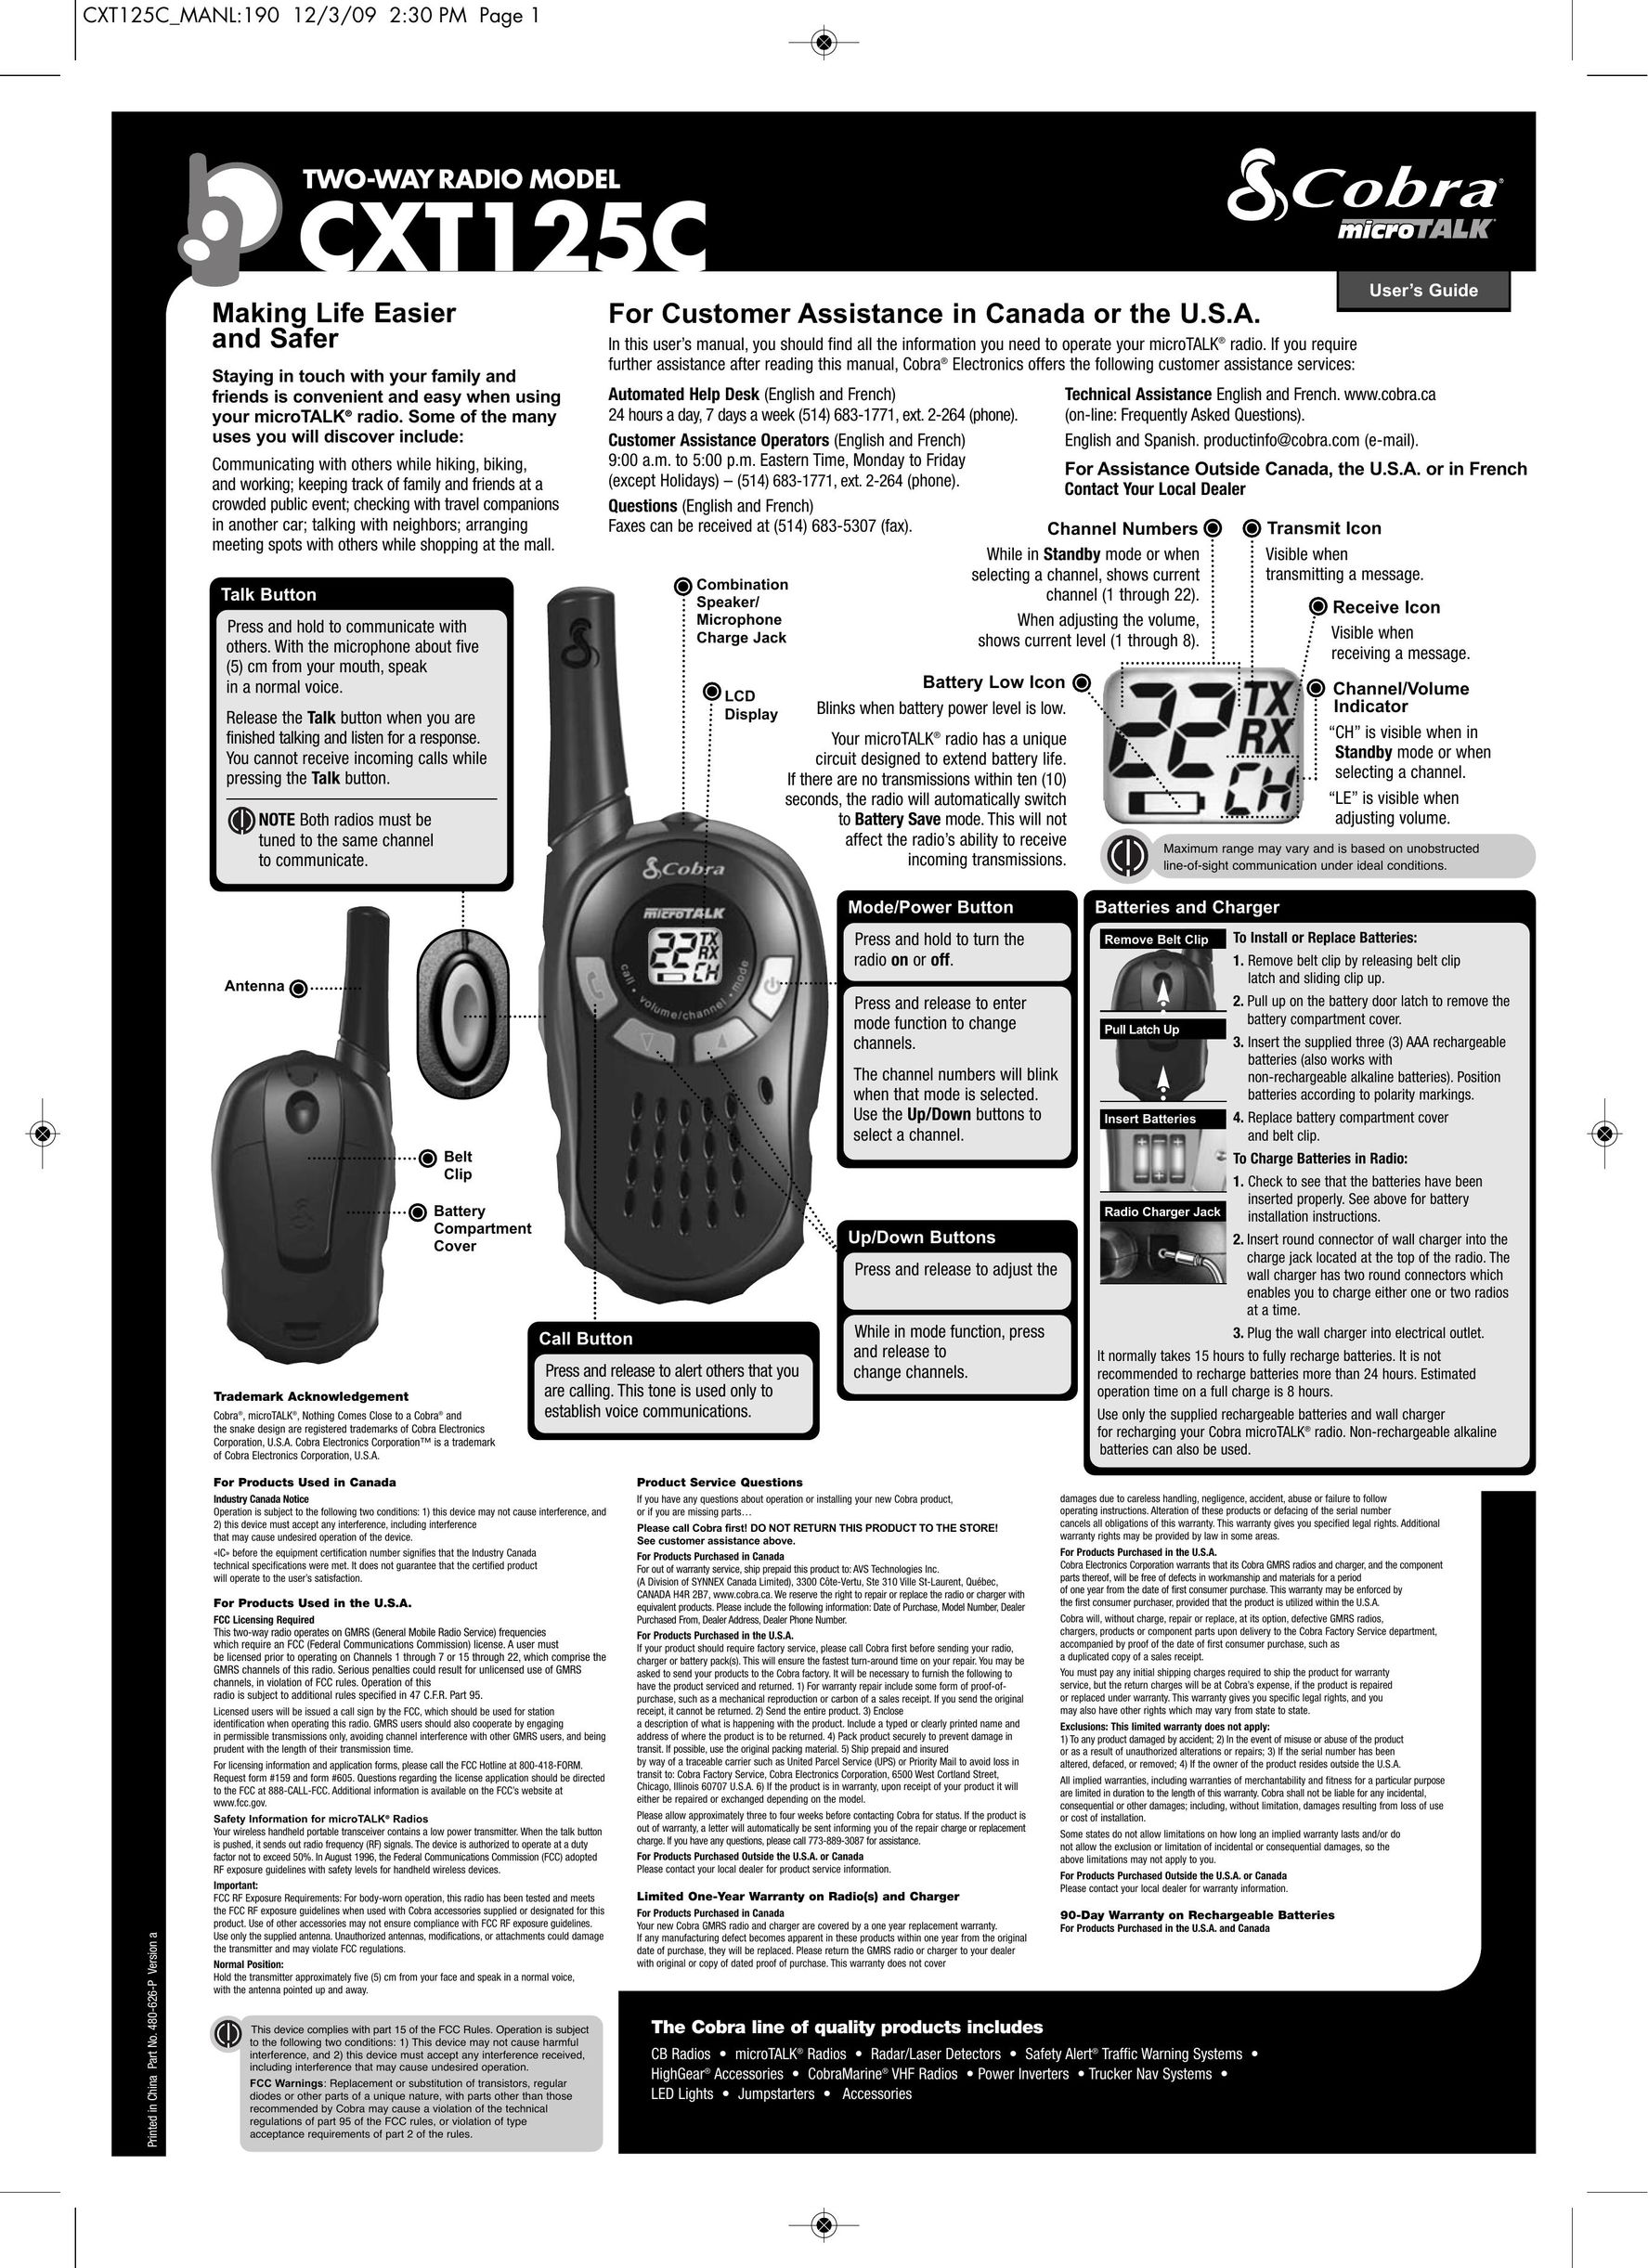 Cobra Electronics CXT125C Two-Way Radio User Manual